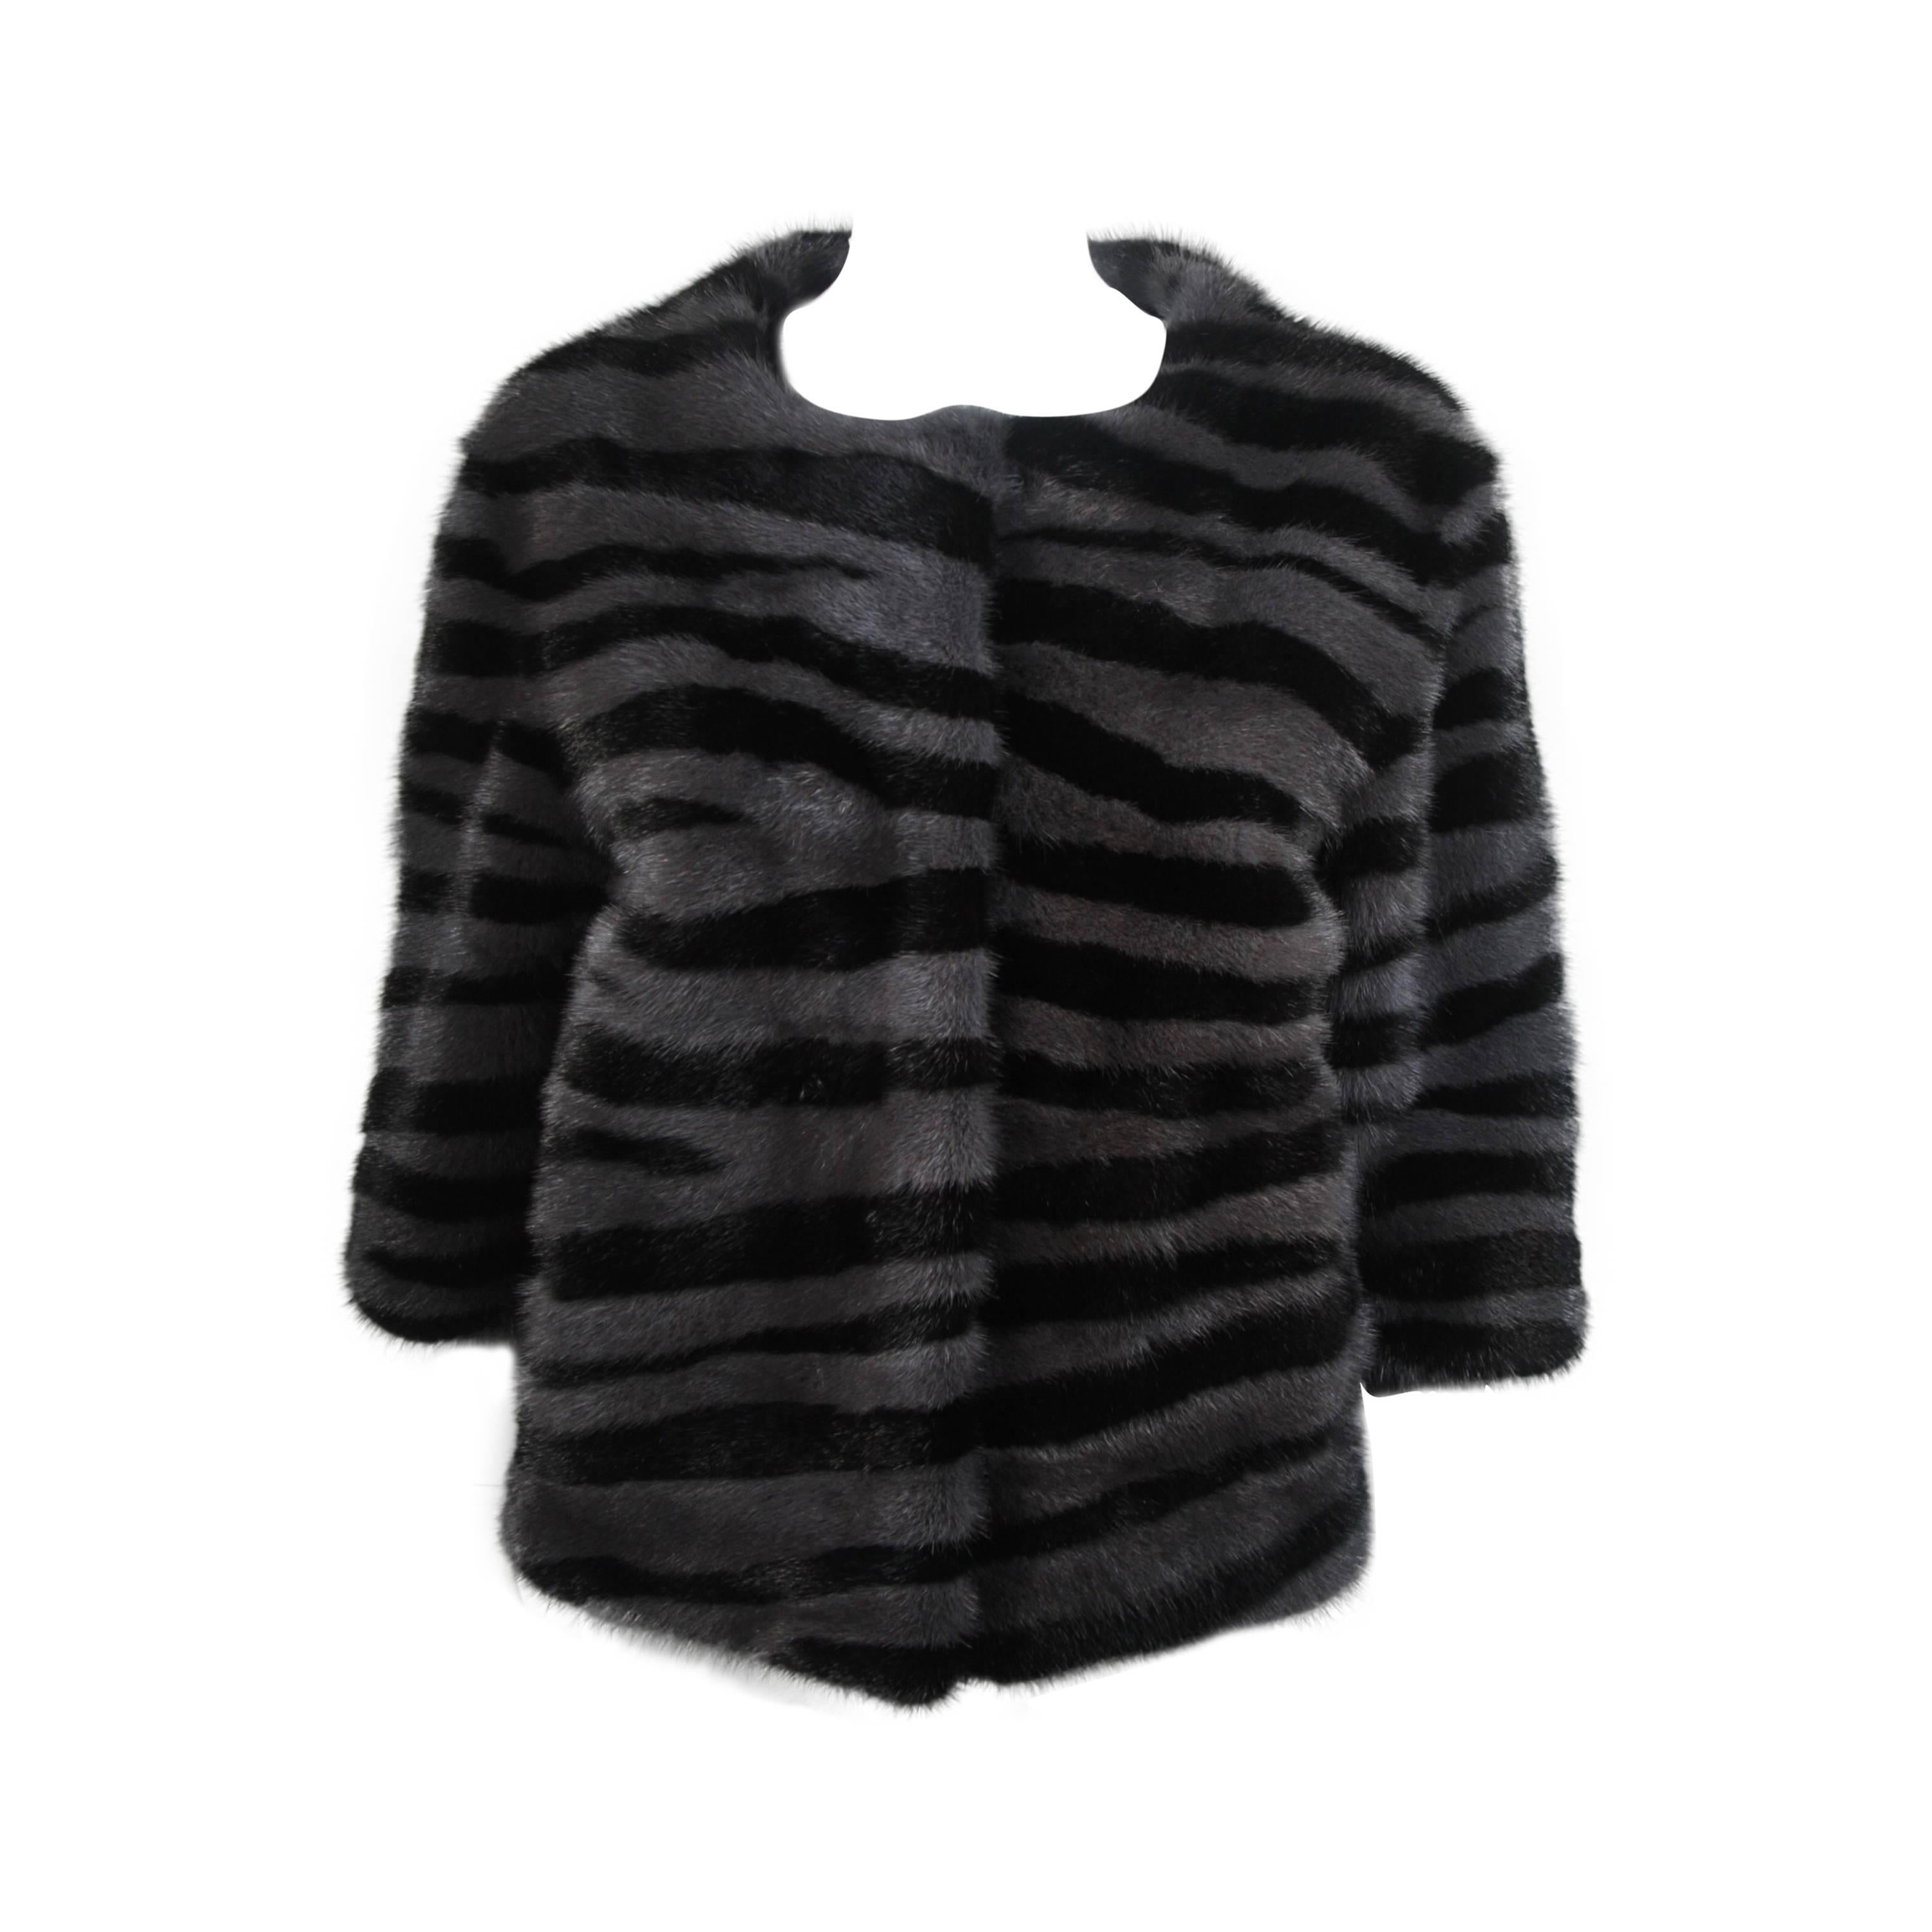 Marc Jacobs Black and Grey Striped Mink Jacket Size 4